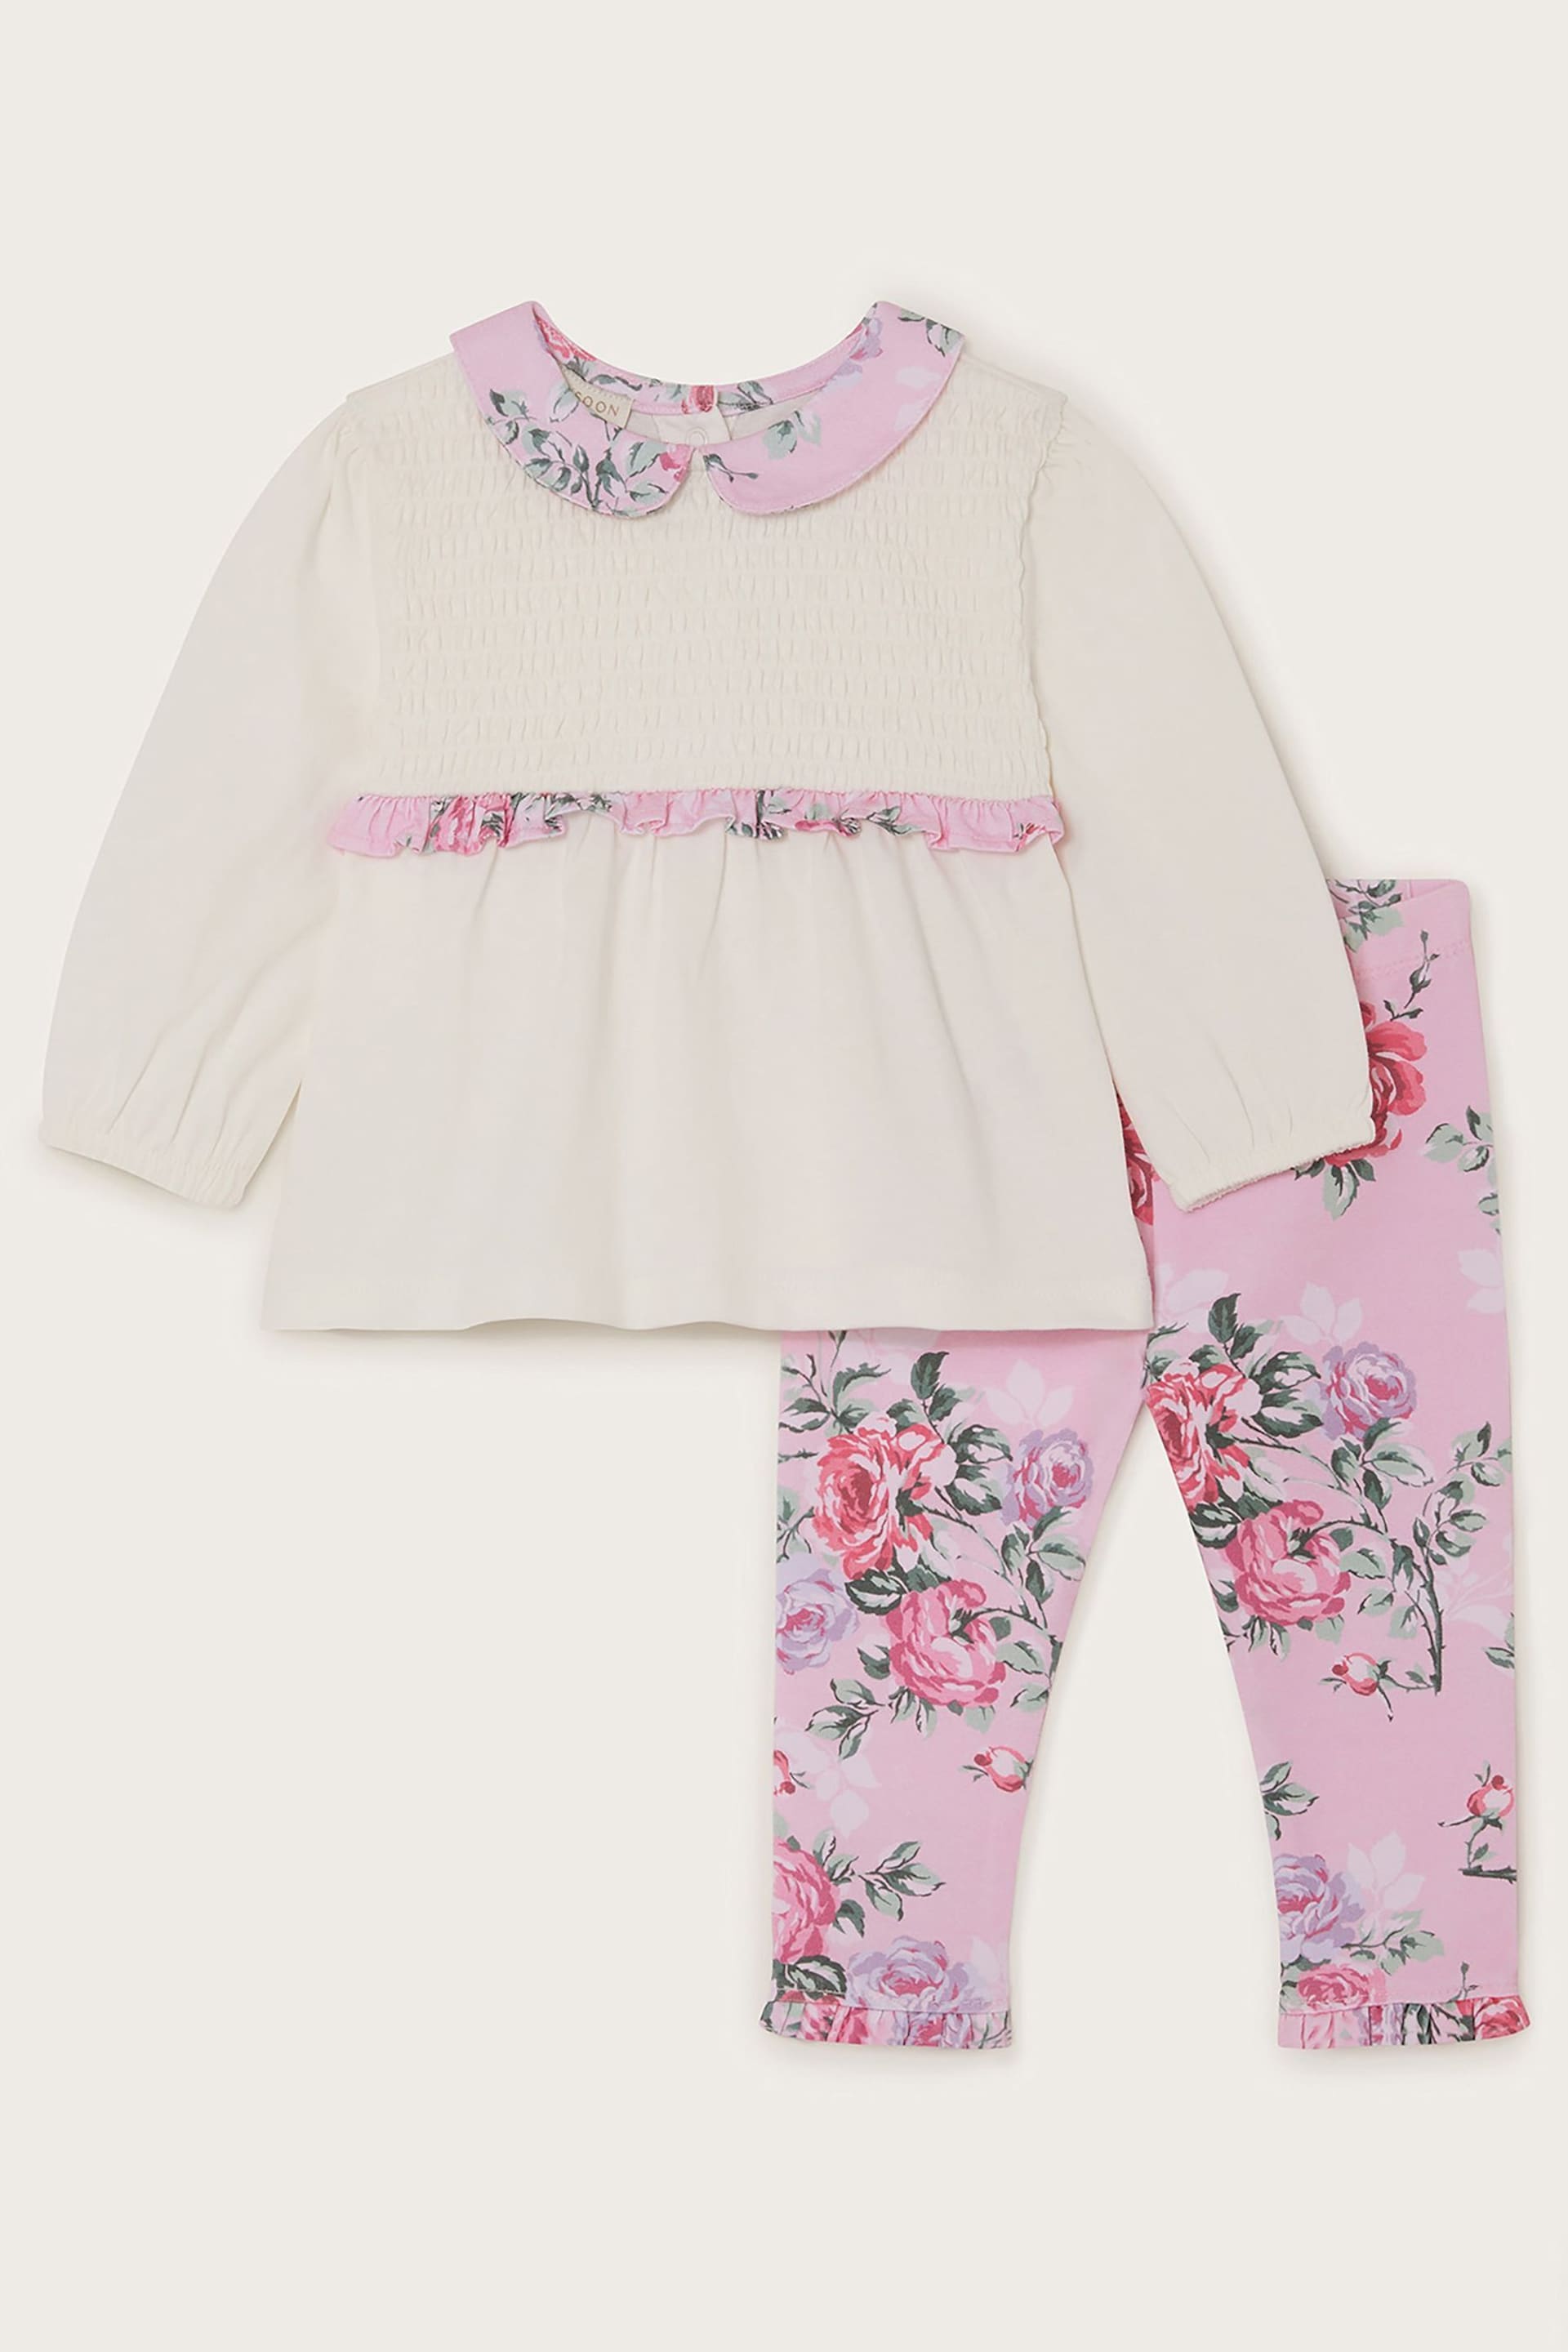 Monsoon Pink Newborn Floral Shirt Set - Image 1 of 3